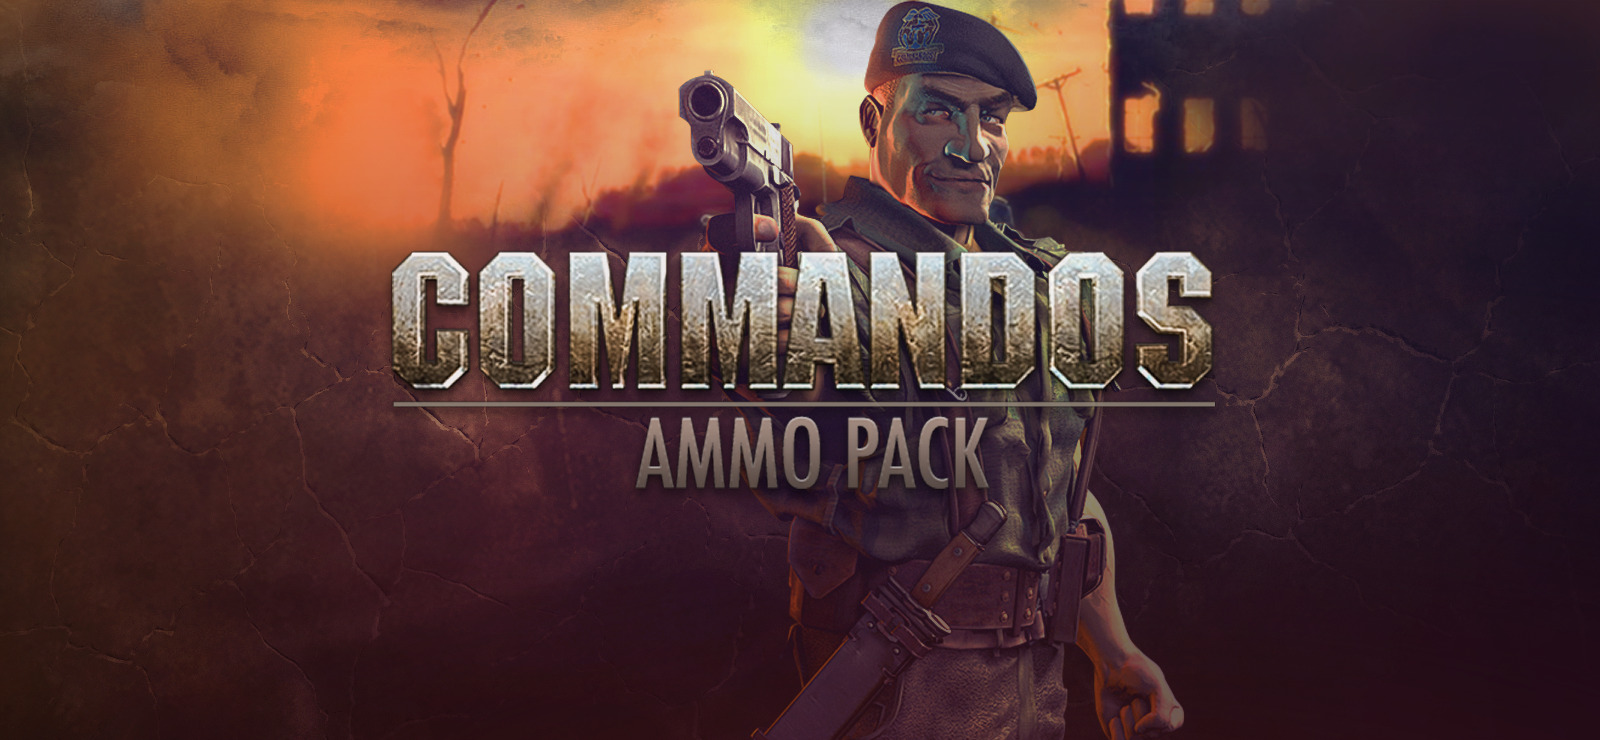 commandos 1,2,3,4,5 game all collection